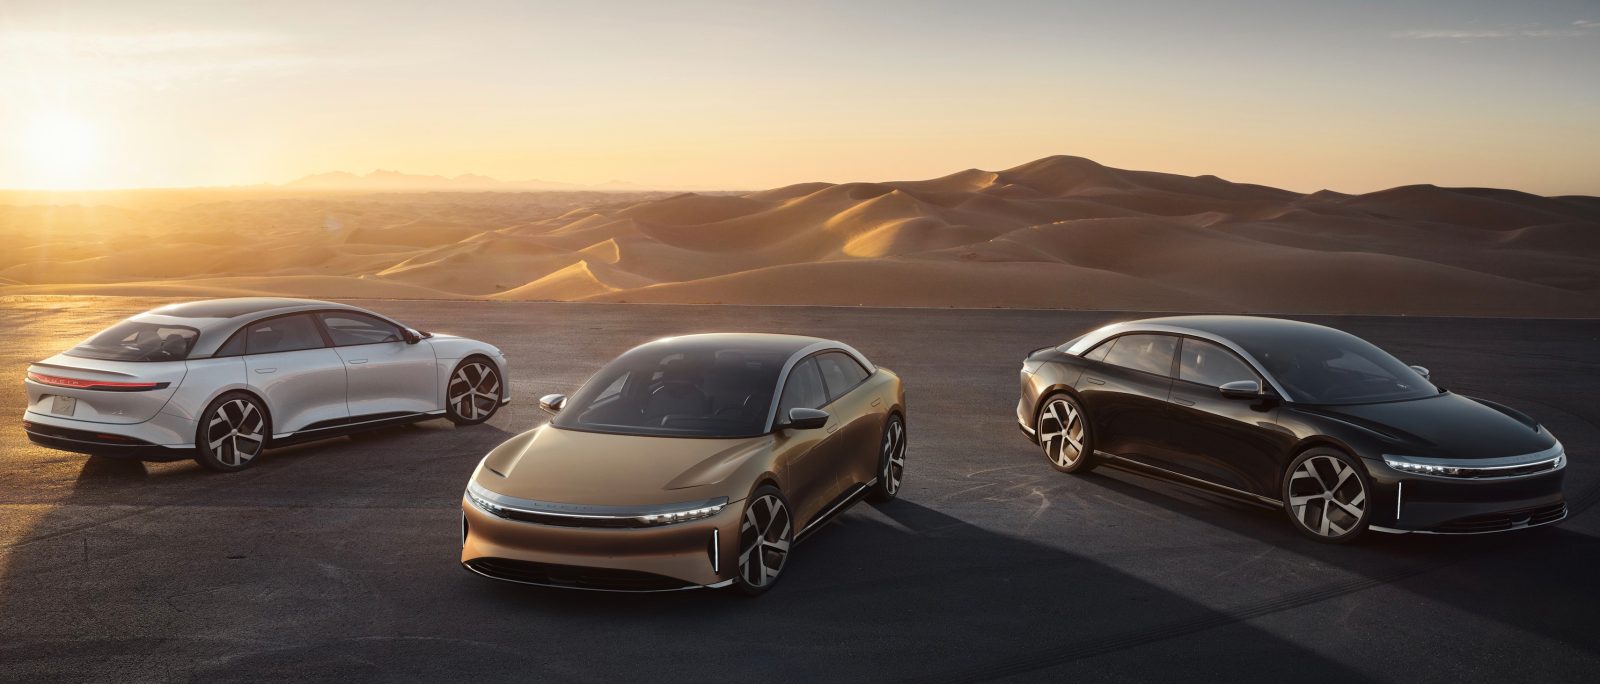 lucid in talks build electric car factory saudi arabia